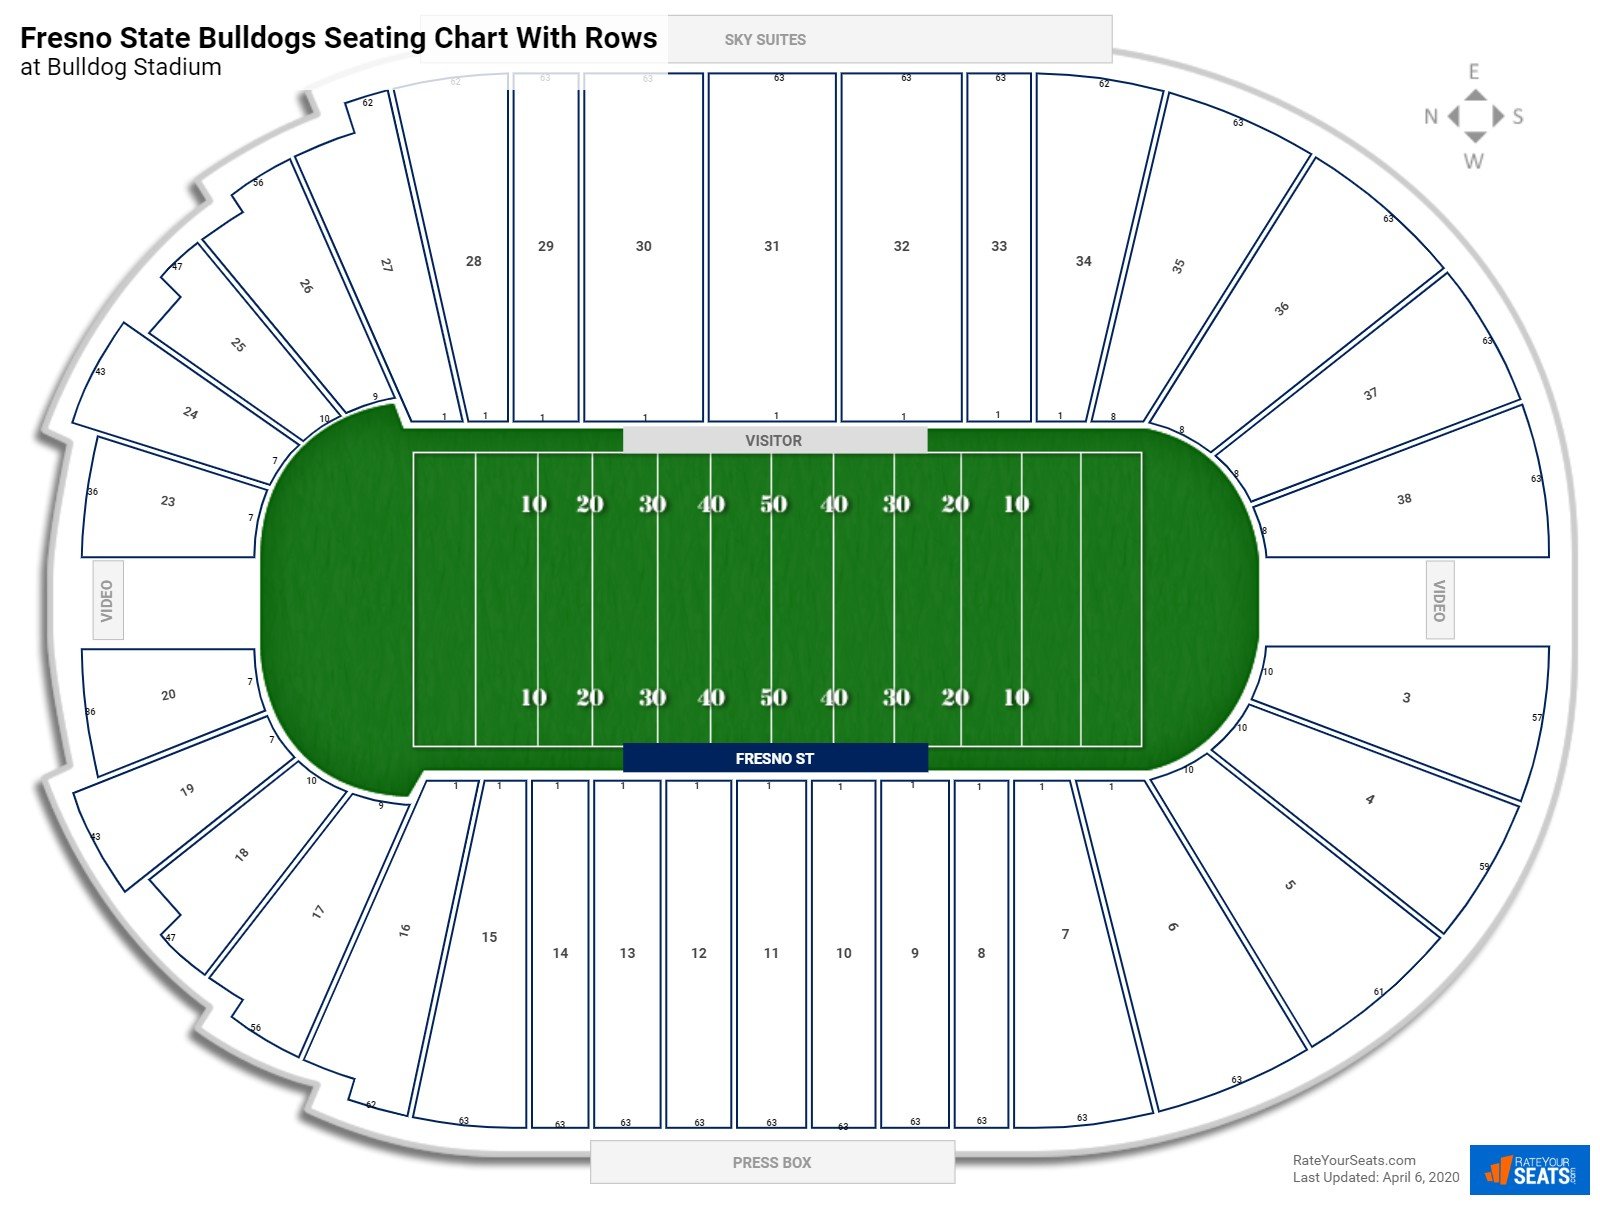 Bulldog Stadium seating chart with row numbers